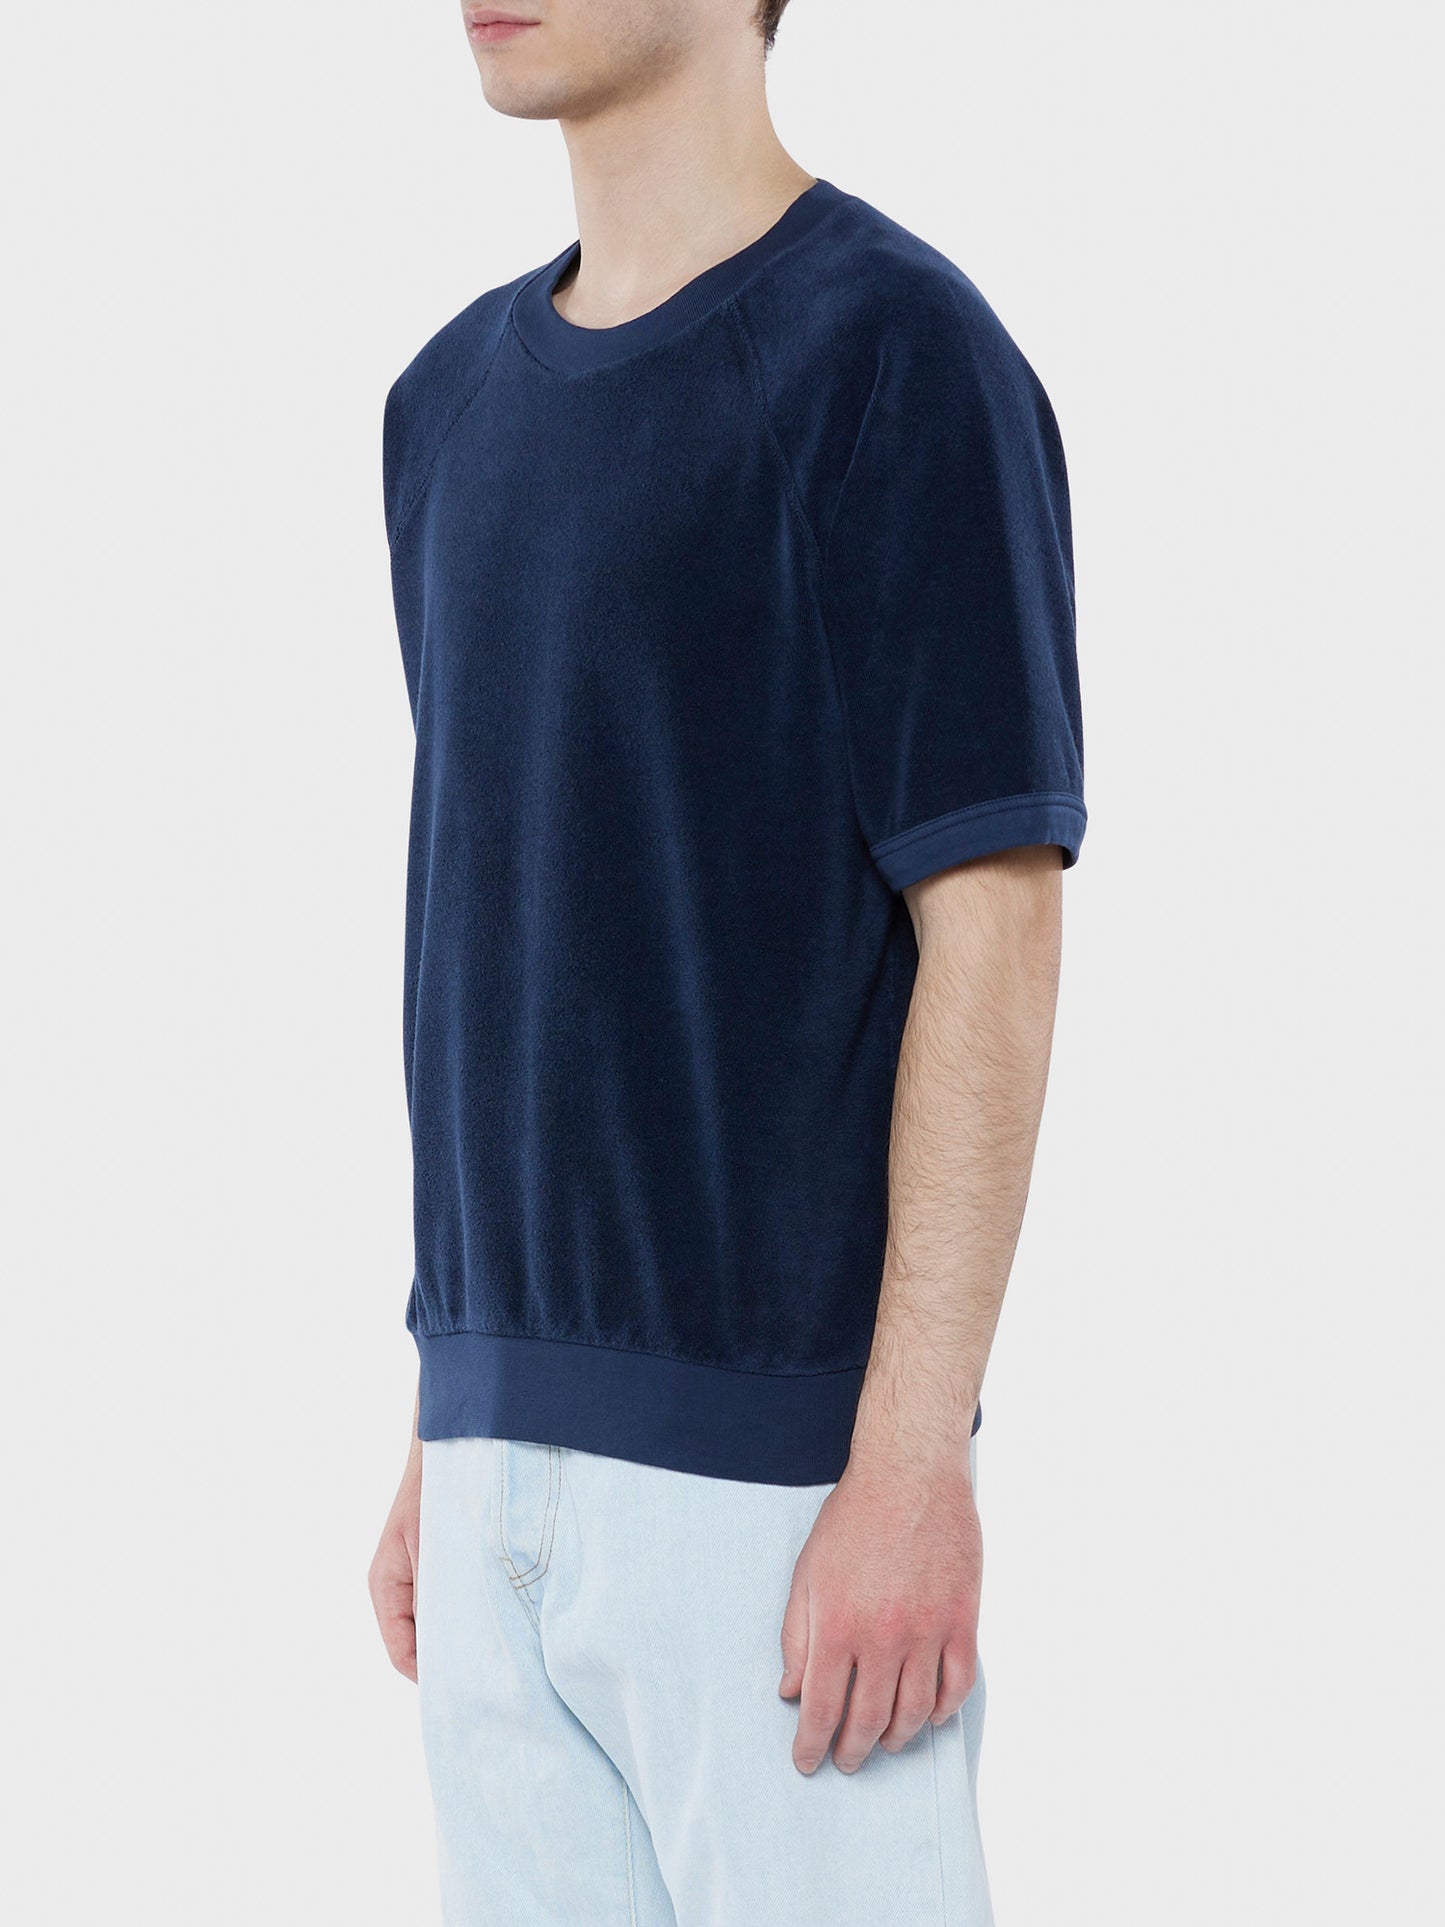 Stillwell short-sleeve sweatshirt